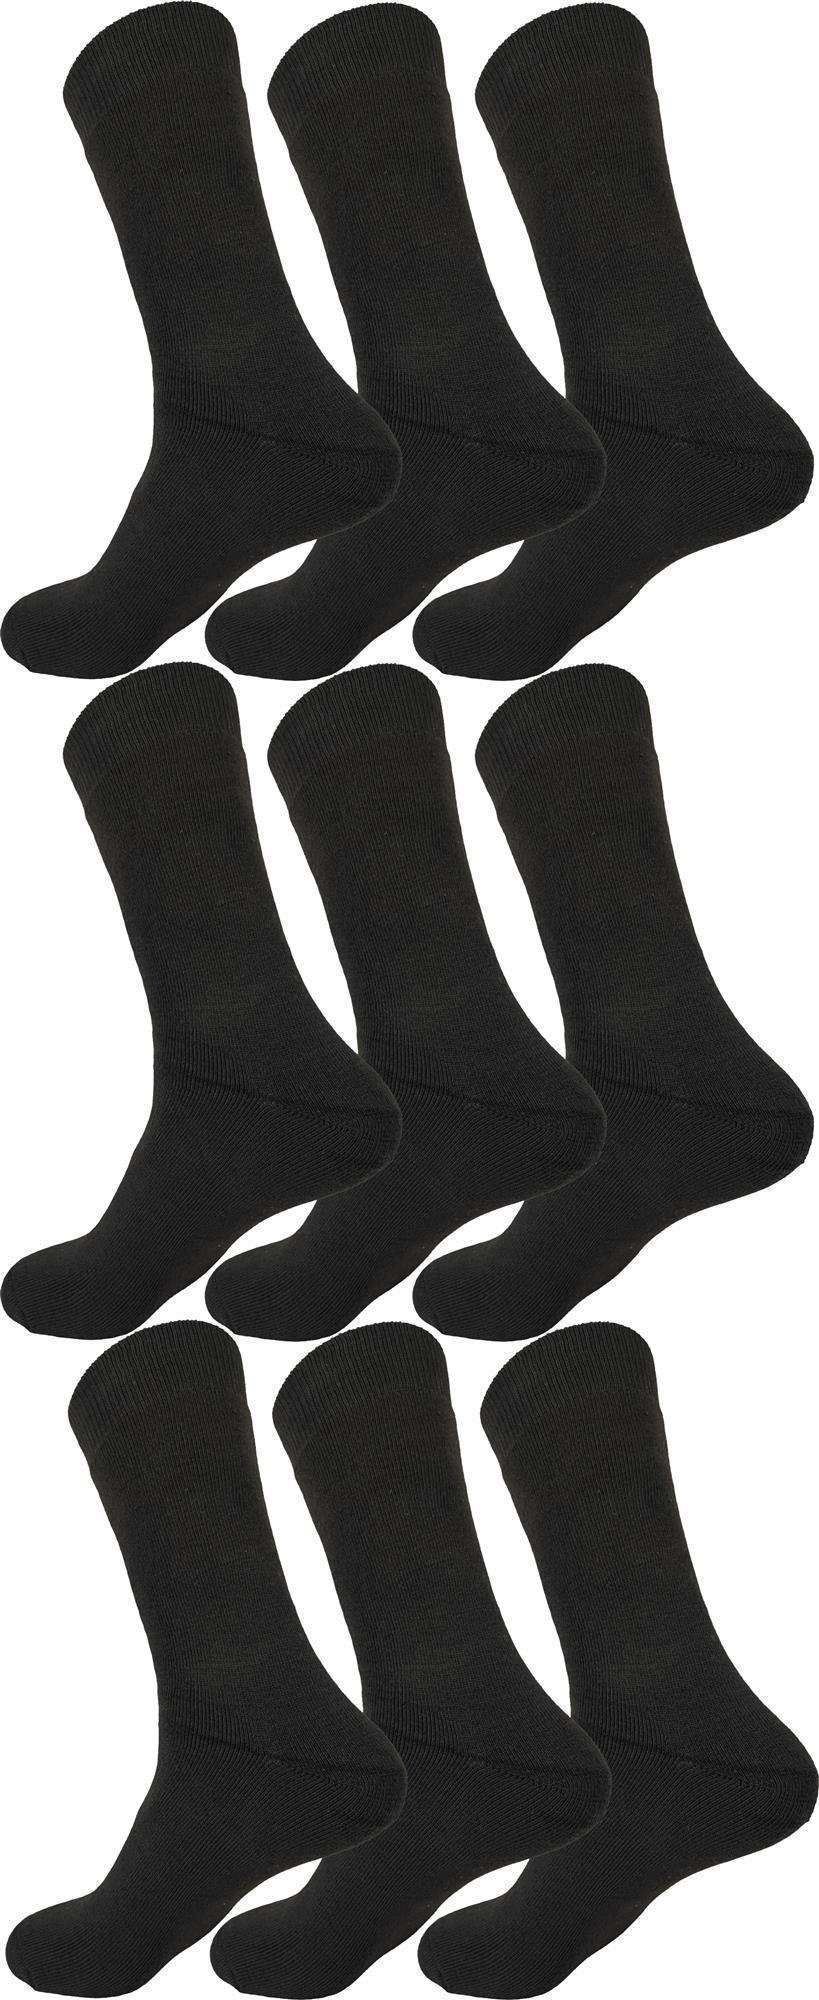 EloModa Thermosocken 12 Paar Thermo Winter Socken Vollfrottee Warm Baumwolle; 39-42 43-46 (12-Paar) 12 Paar, Schwarz